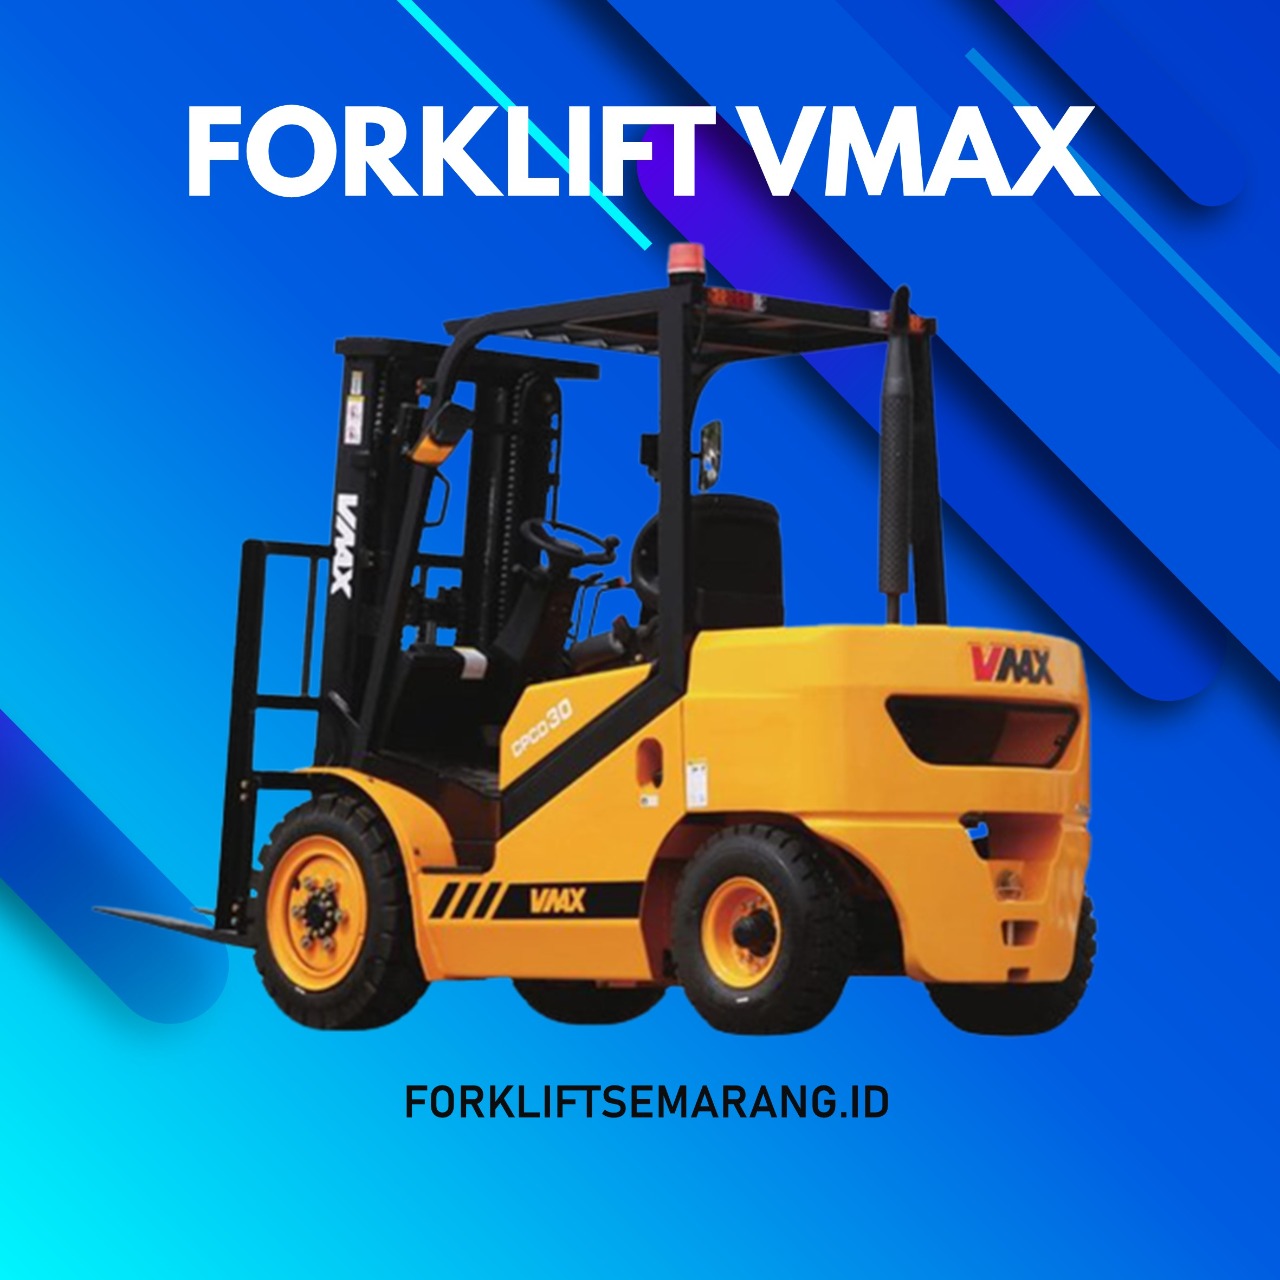 FORKLIFT VMAX